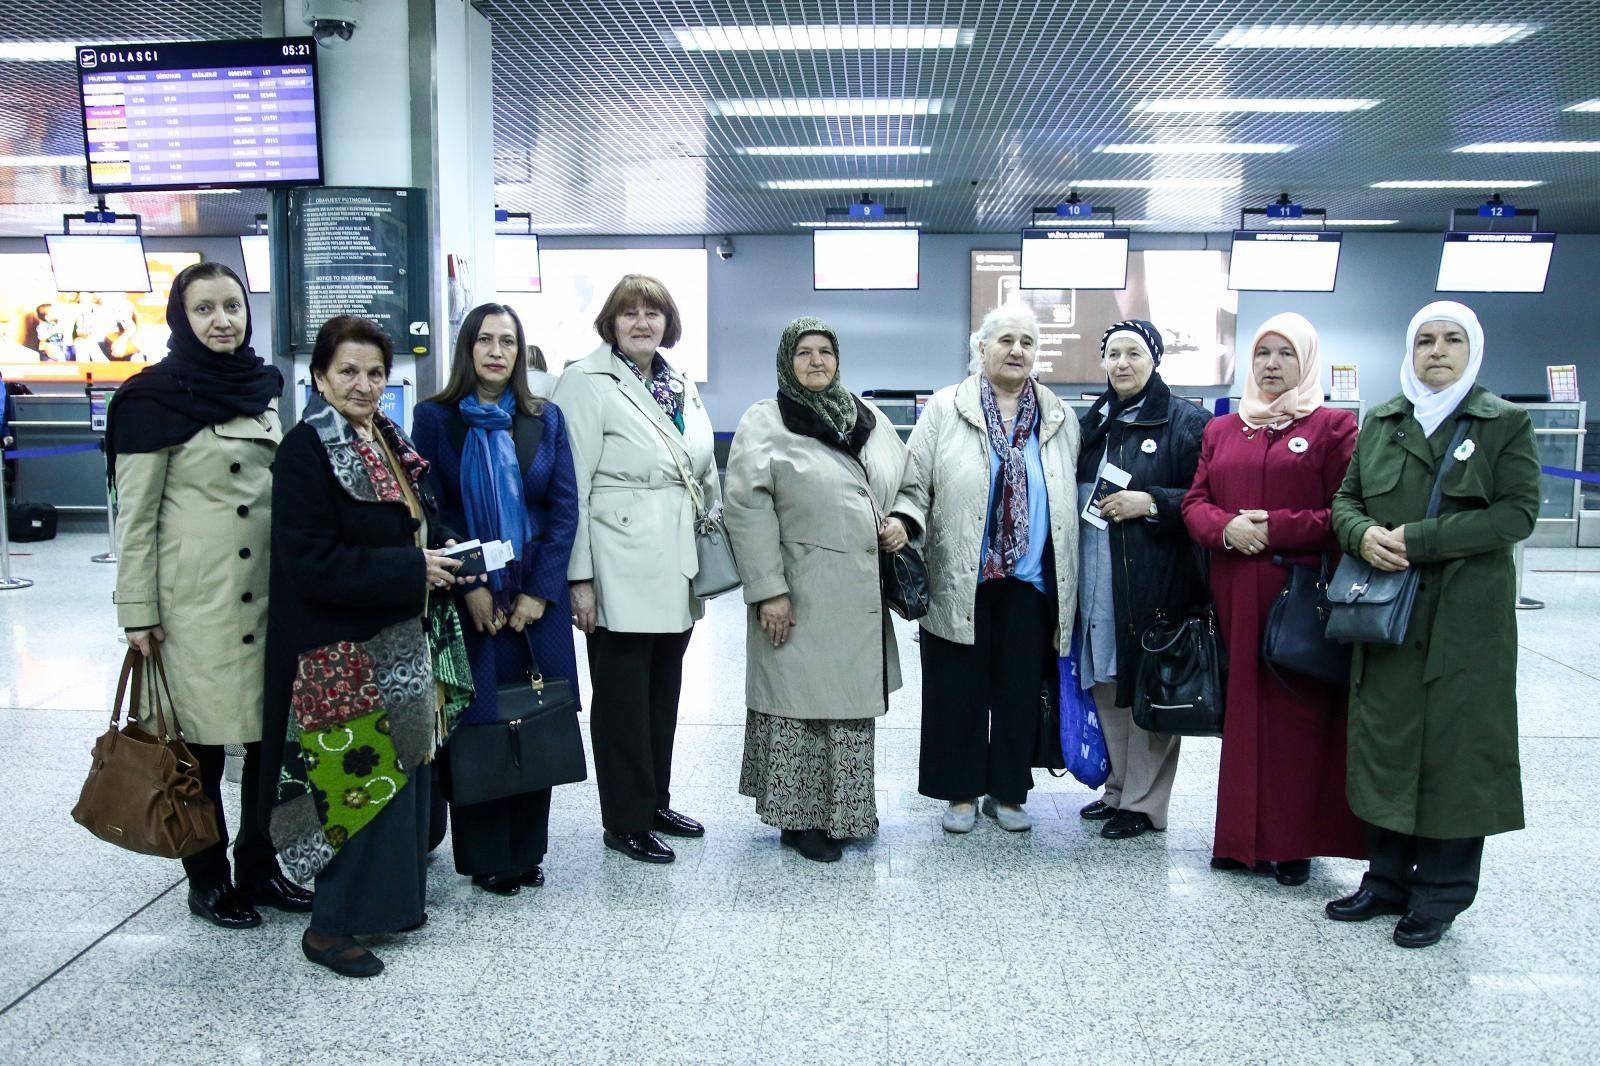 Predstavnice Udruženja "Majke Srebrenice" na  Sarajevskom aerodromu - Avaz